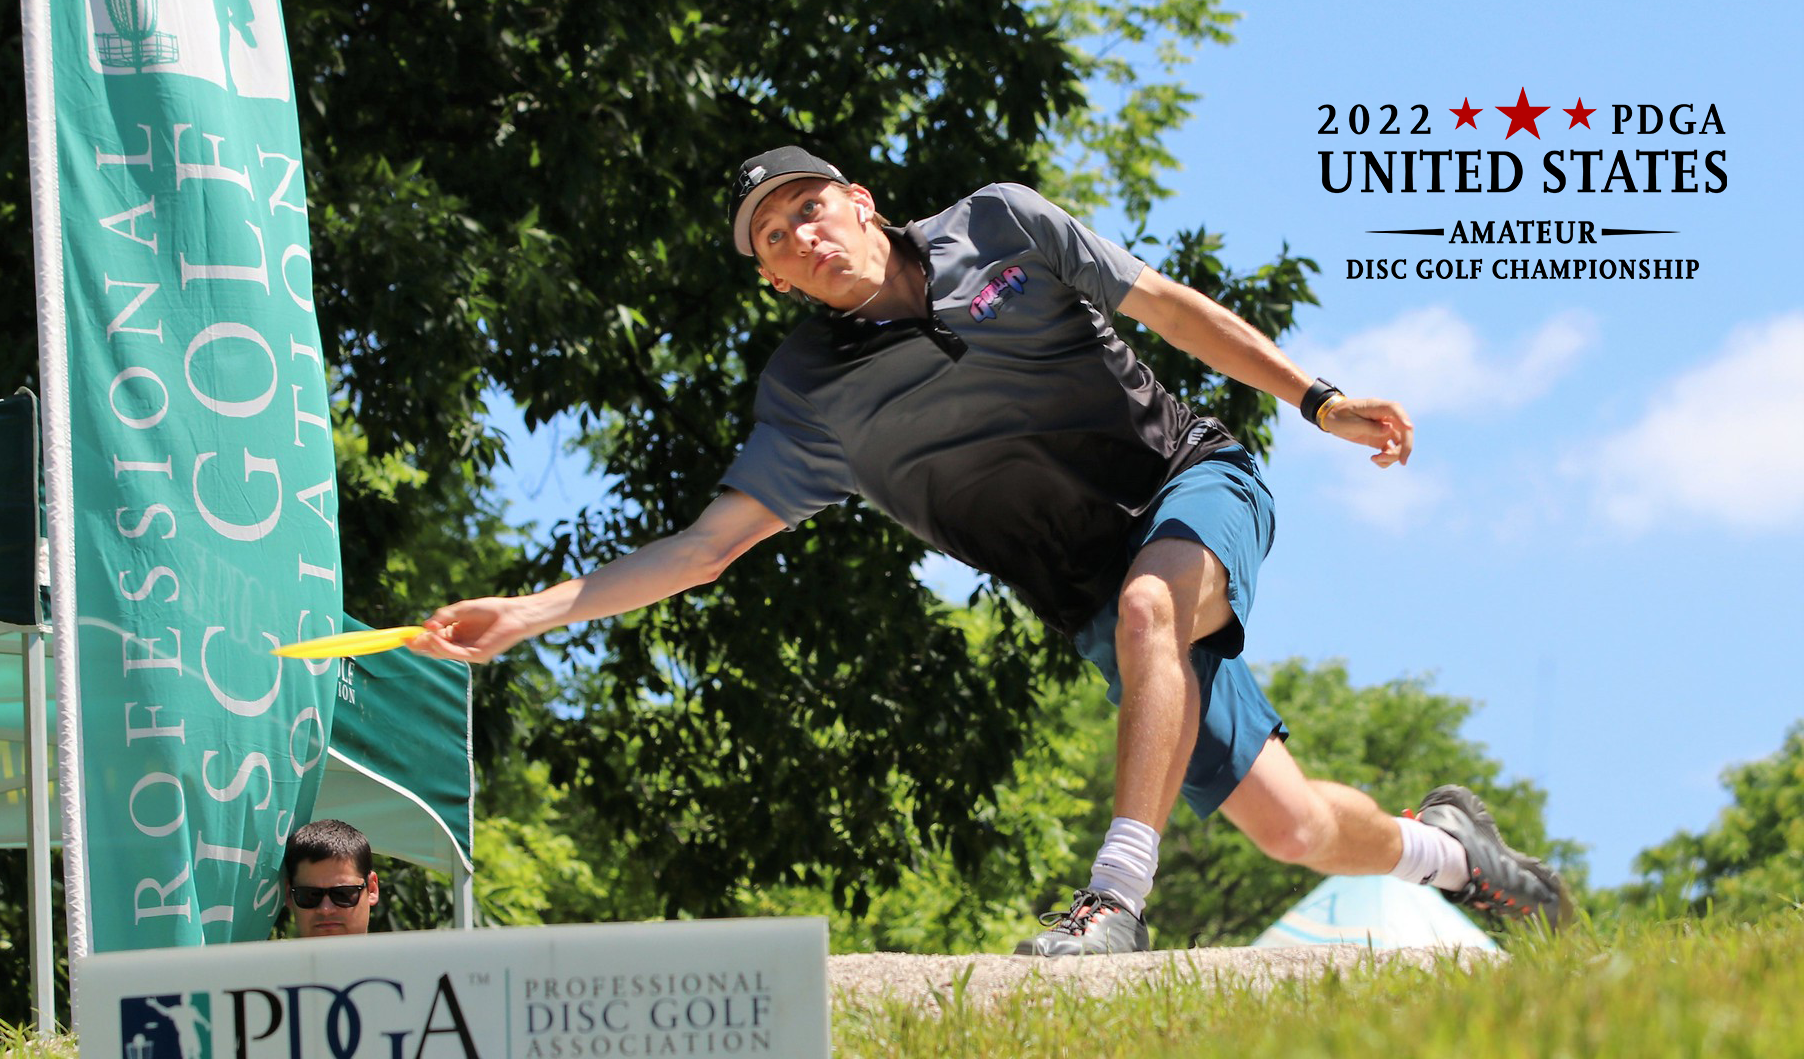 Whos Got Next at the USADGC? Professional Disc Golf Association